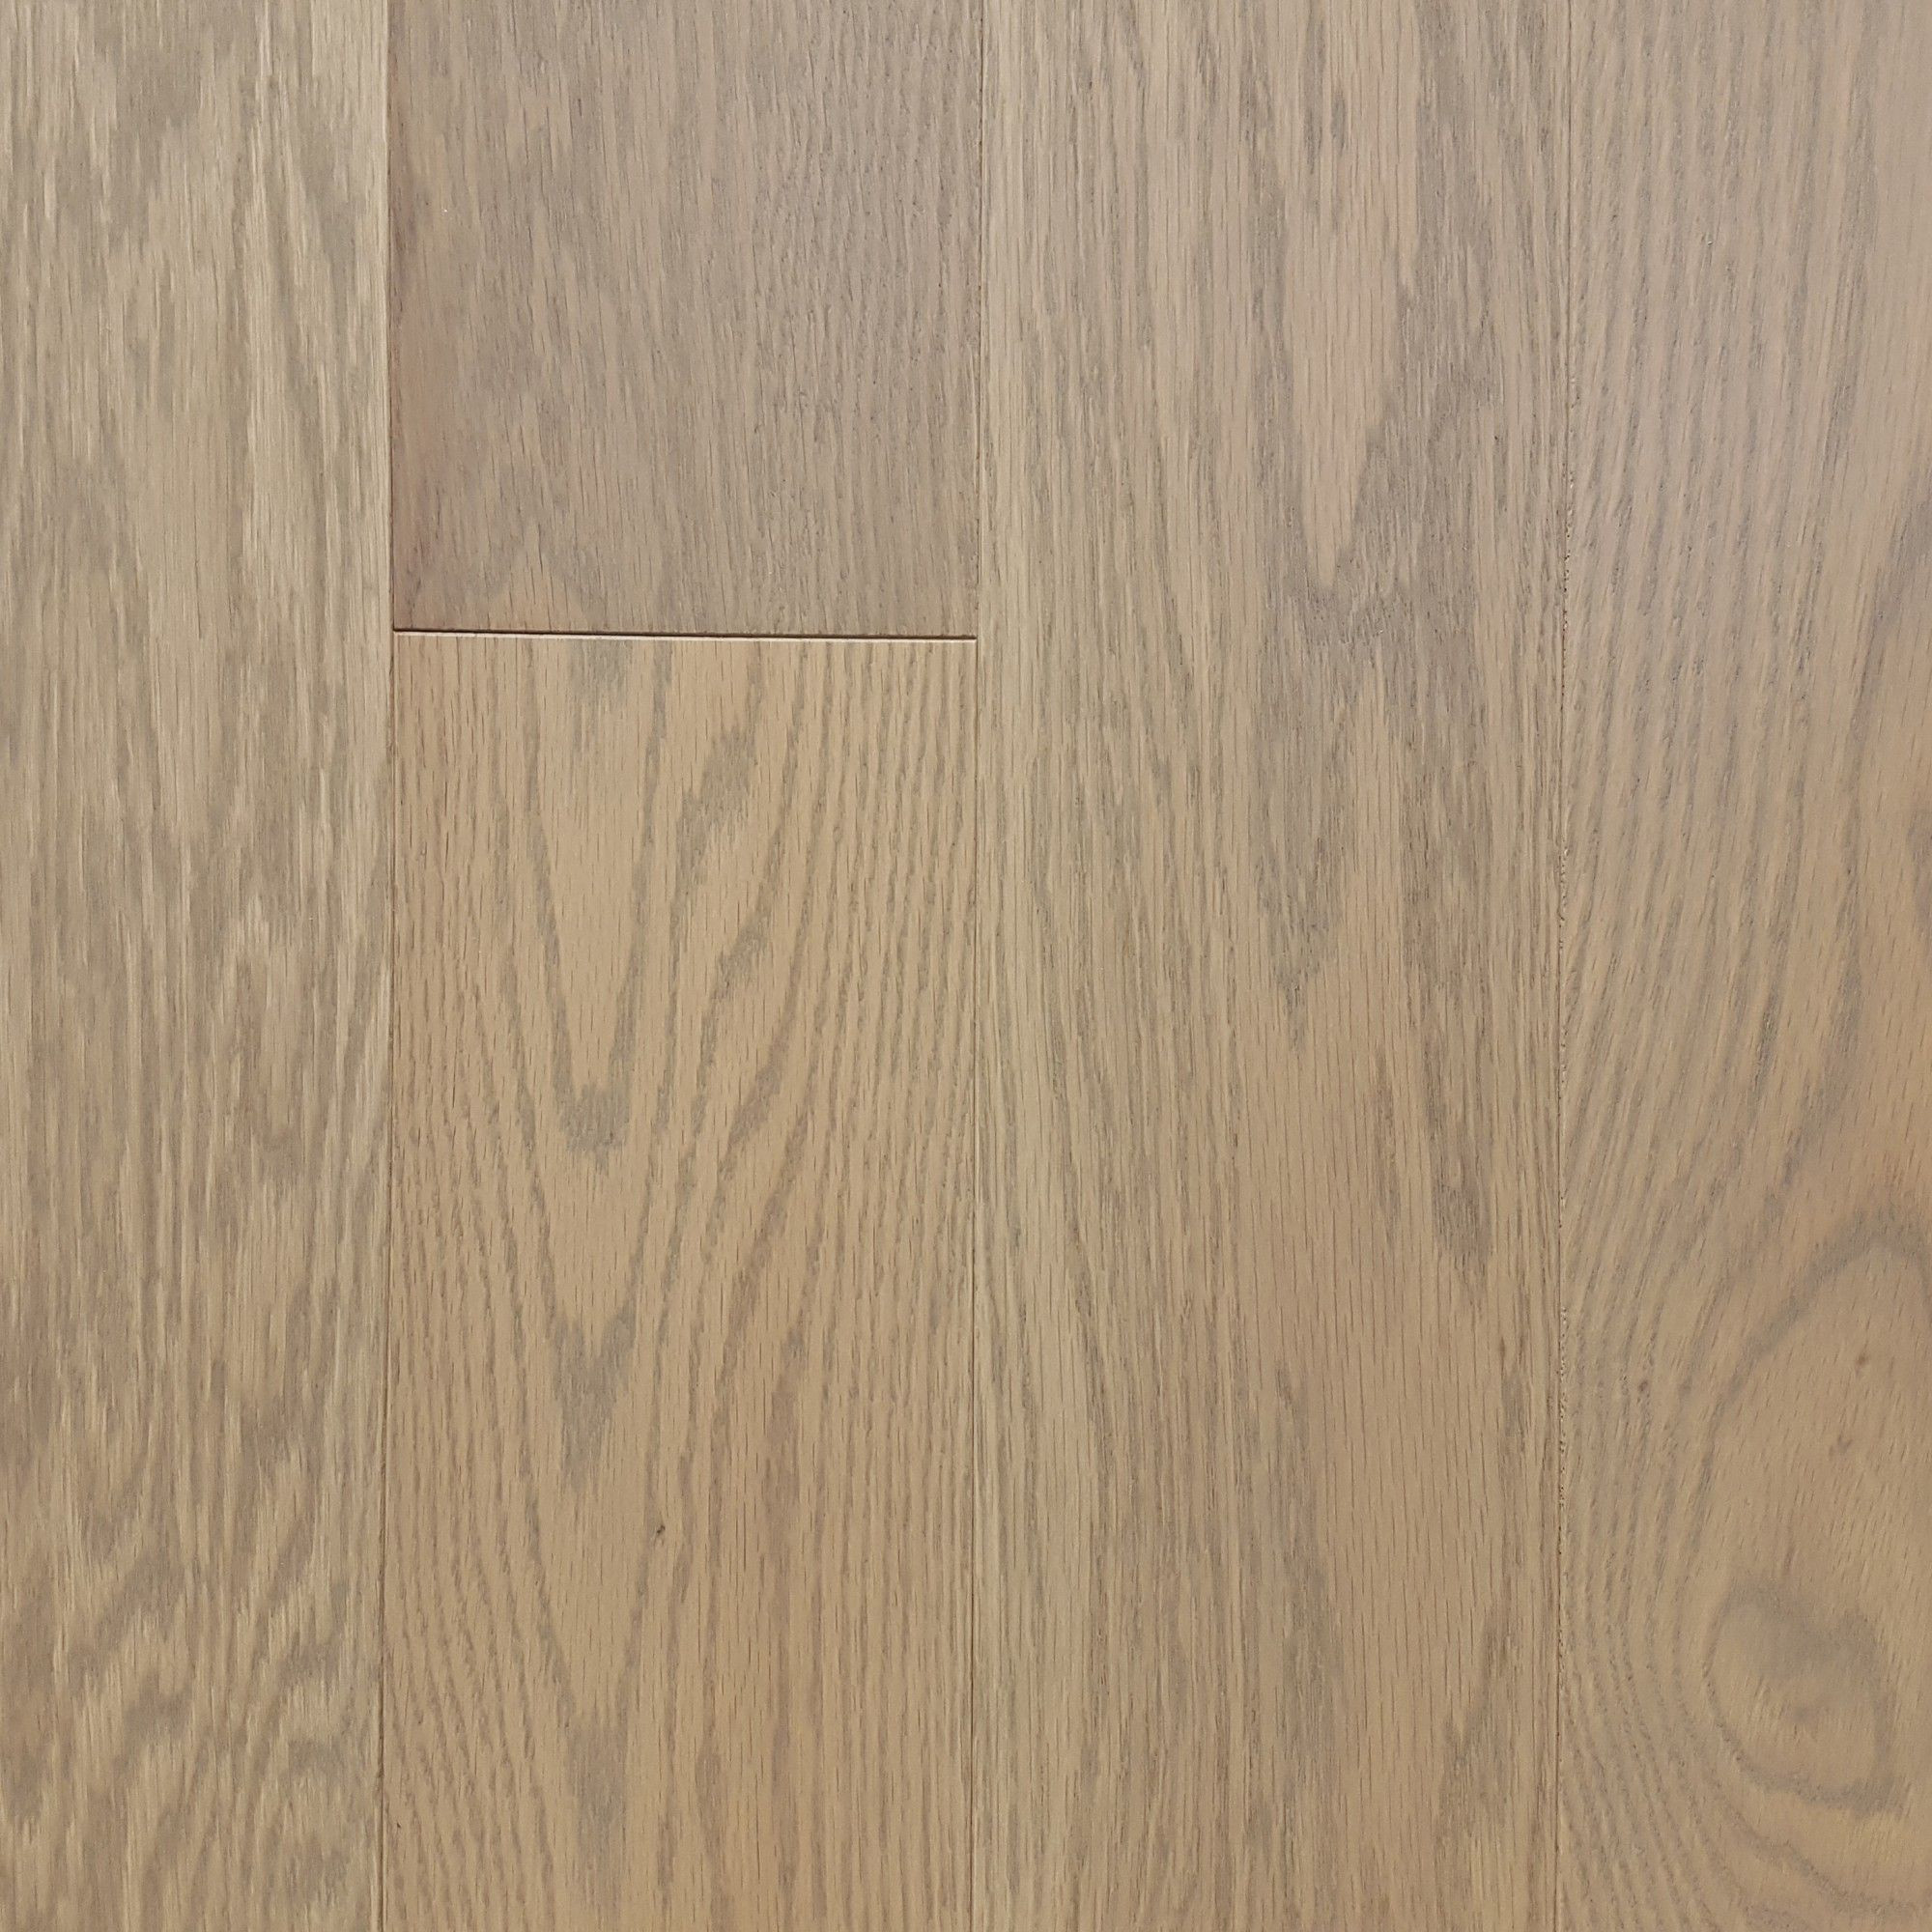 3 4 unfinished engineered hardwood flooring of red oak baja vintage prefinished hardwood flooring low voc regarding red oak baja vintage prefinished hardwood flooring low voc take back